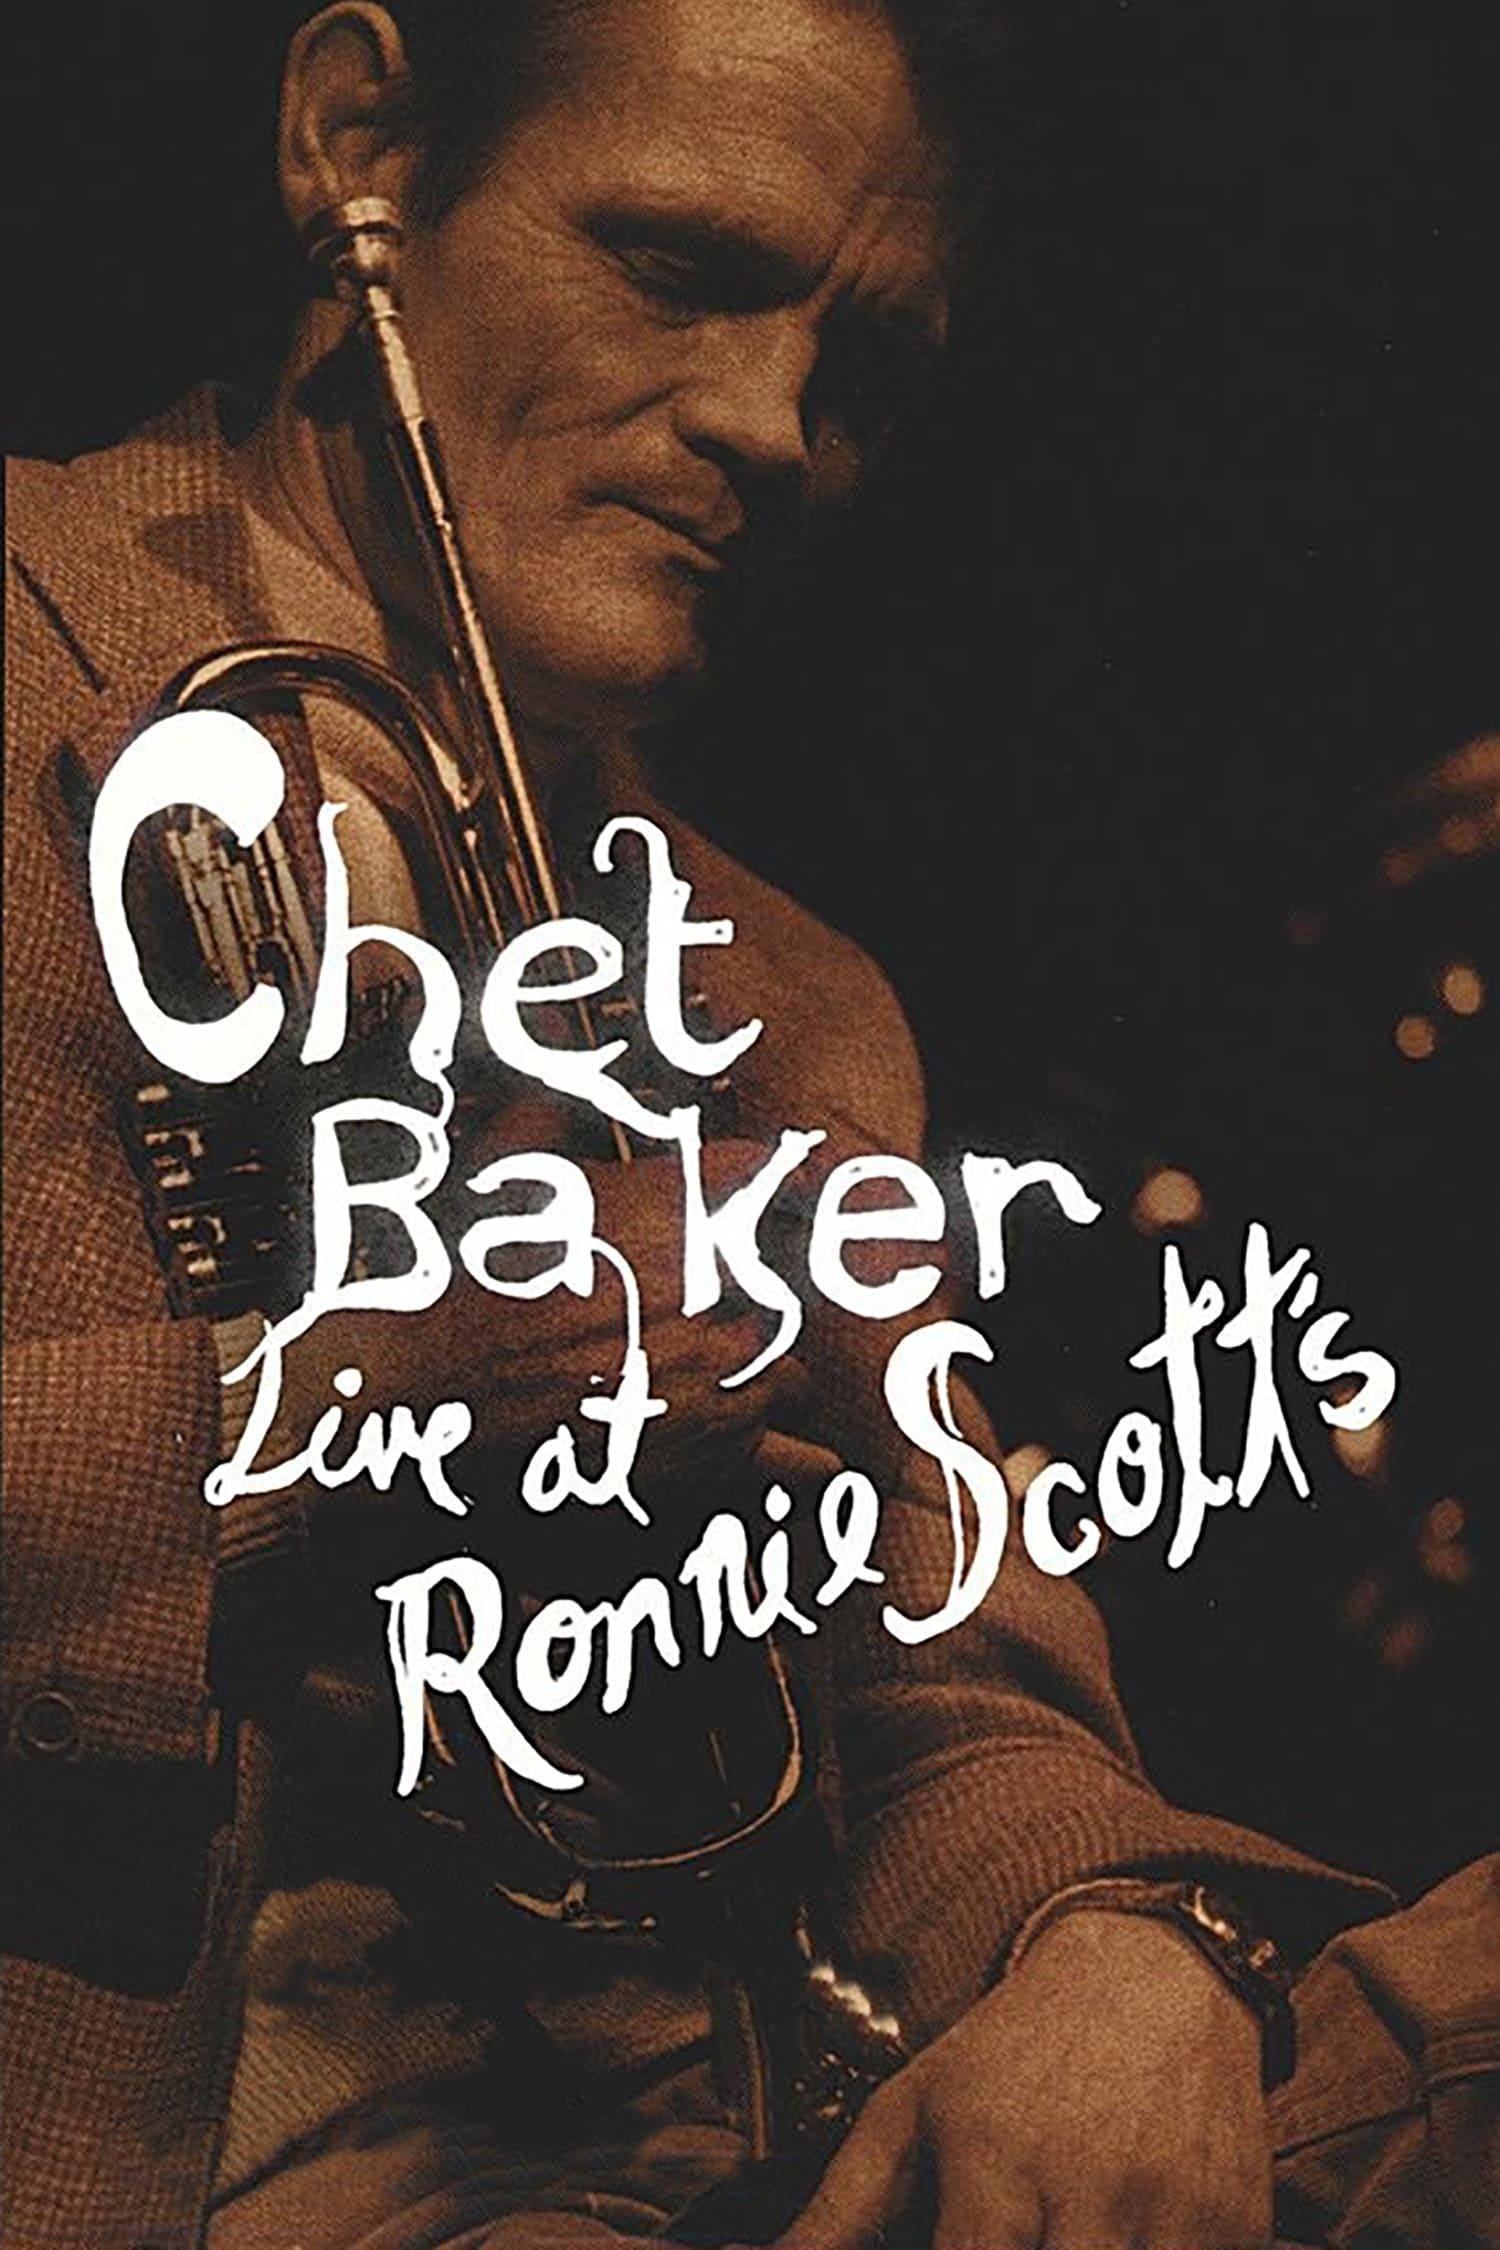 Chet Baker Live at Ronnie Scott's poster